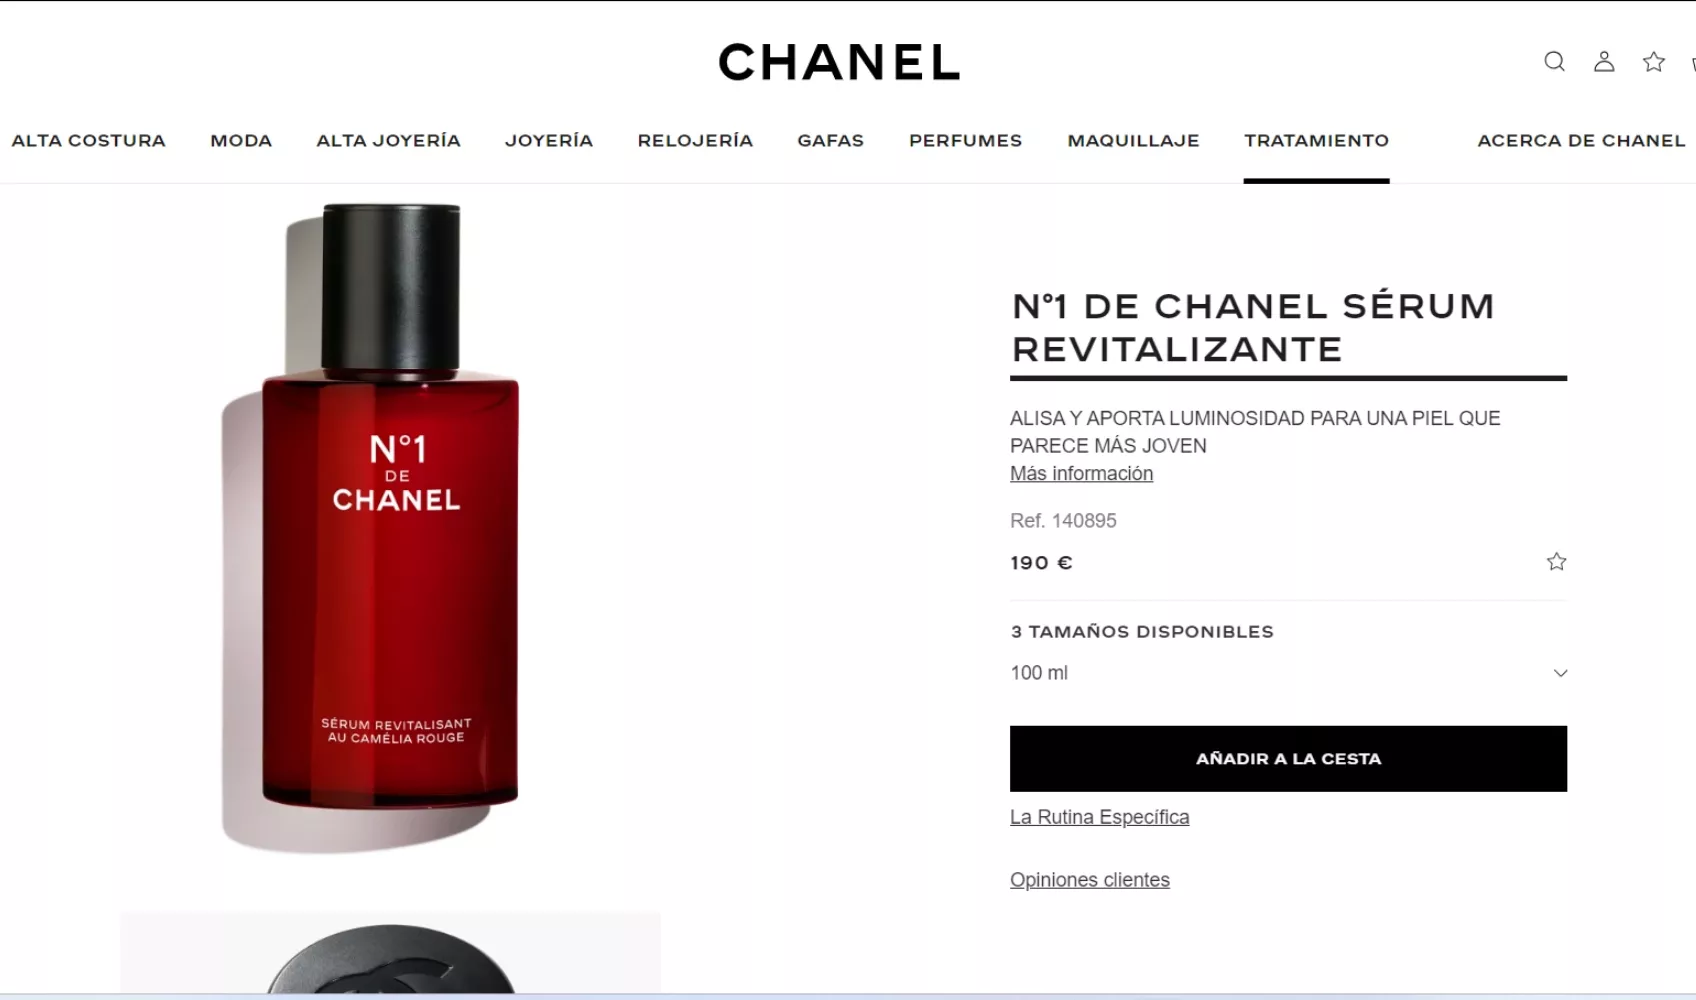 Sérum de Chanel / CHANEL